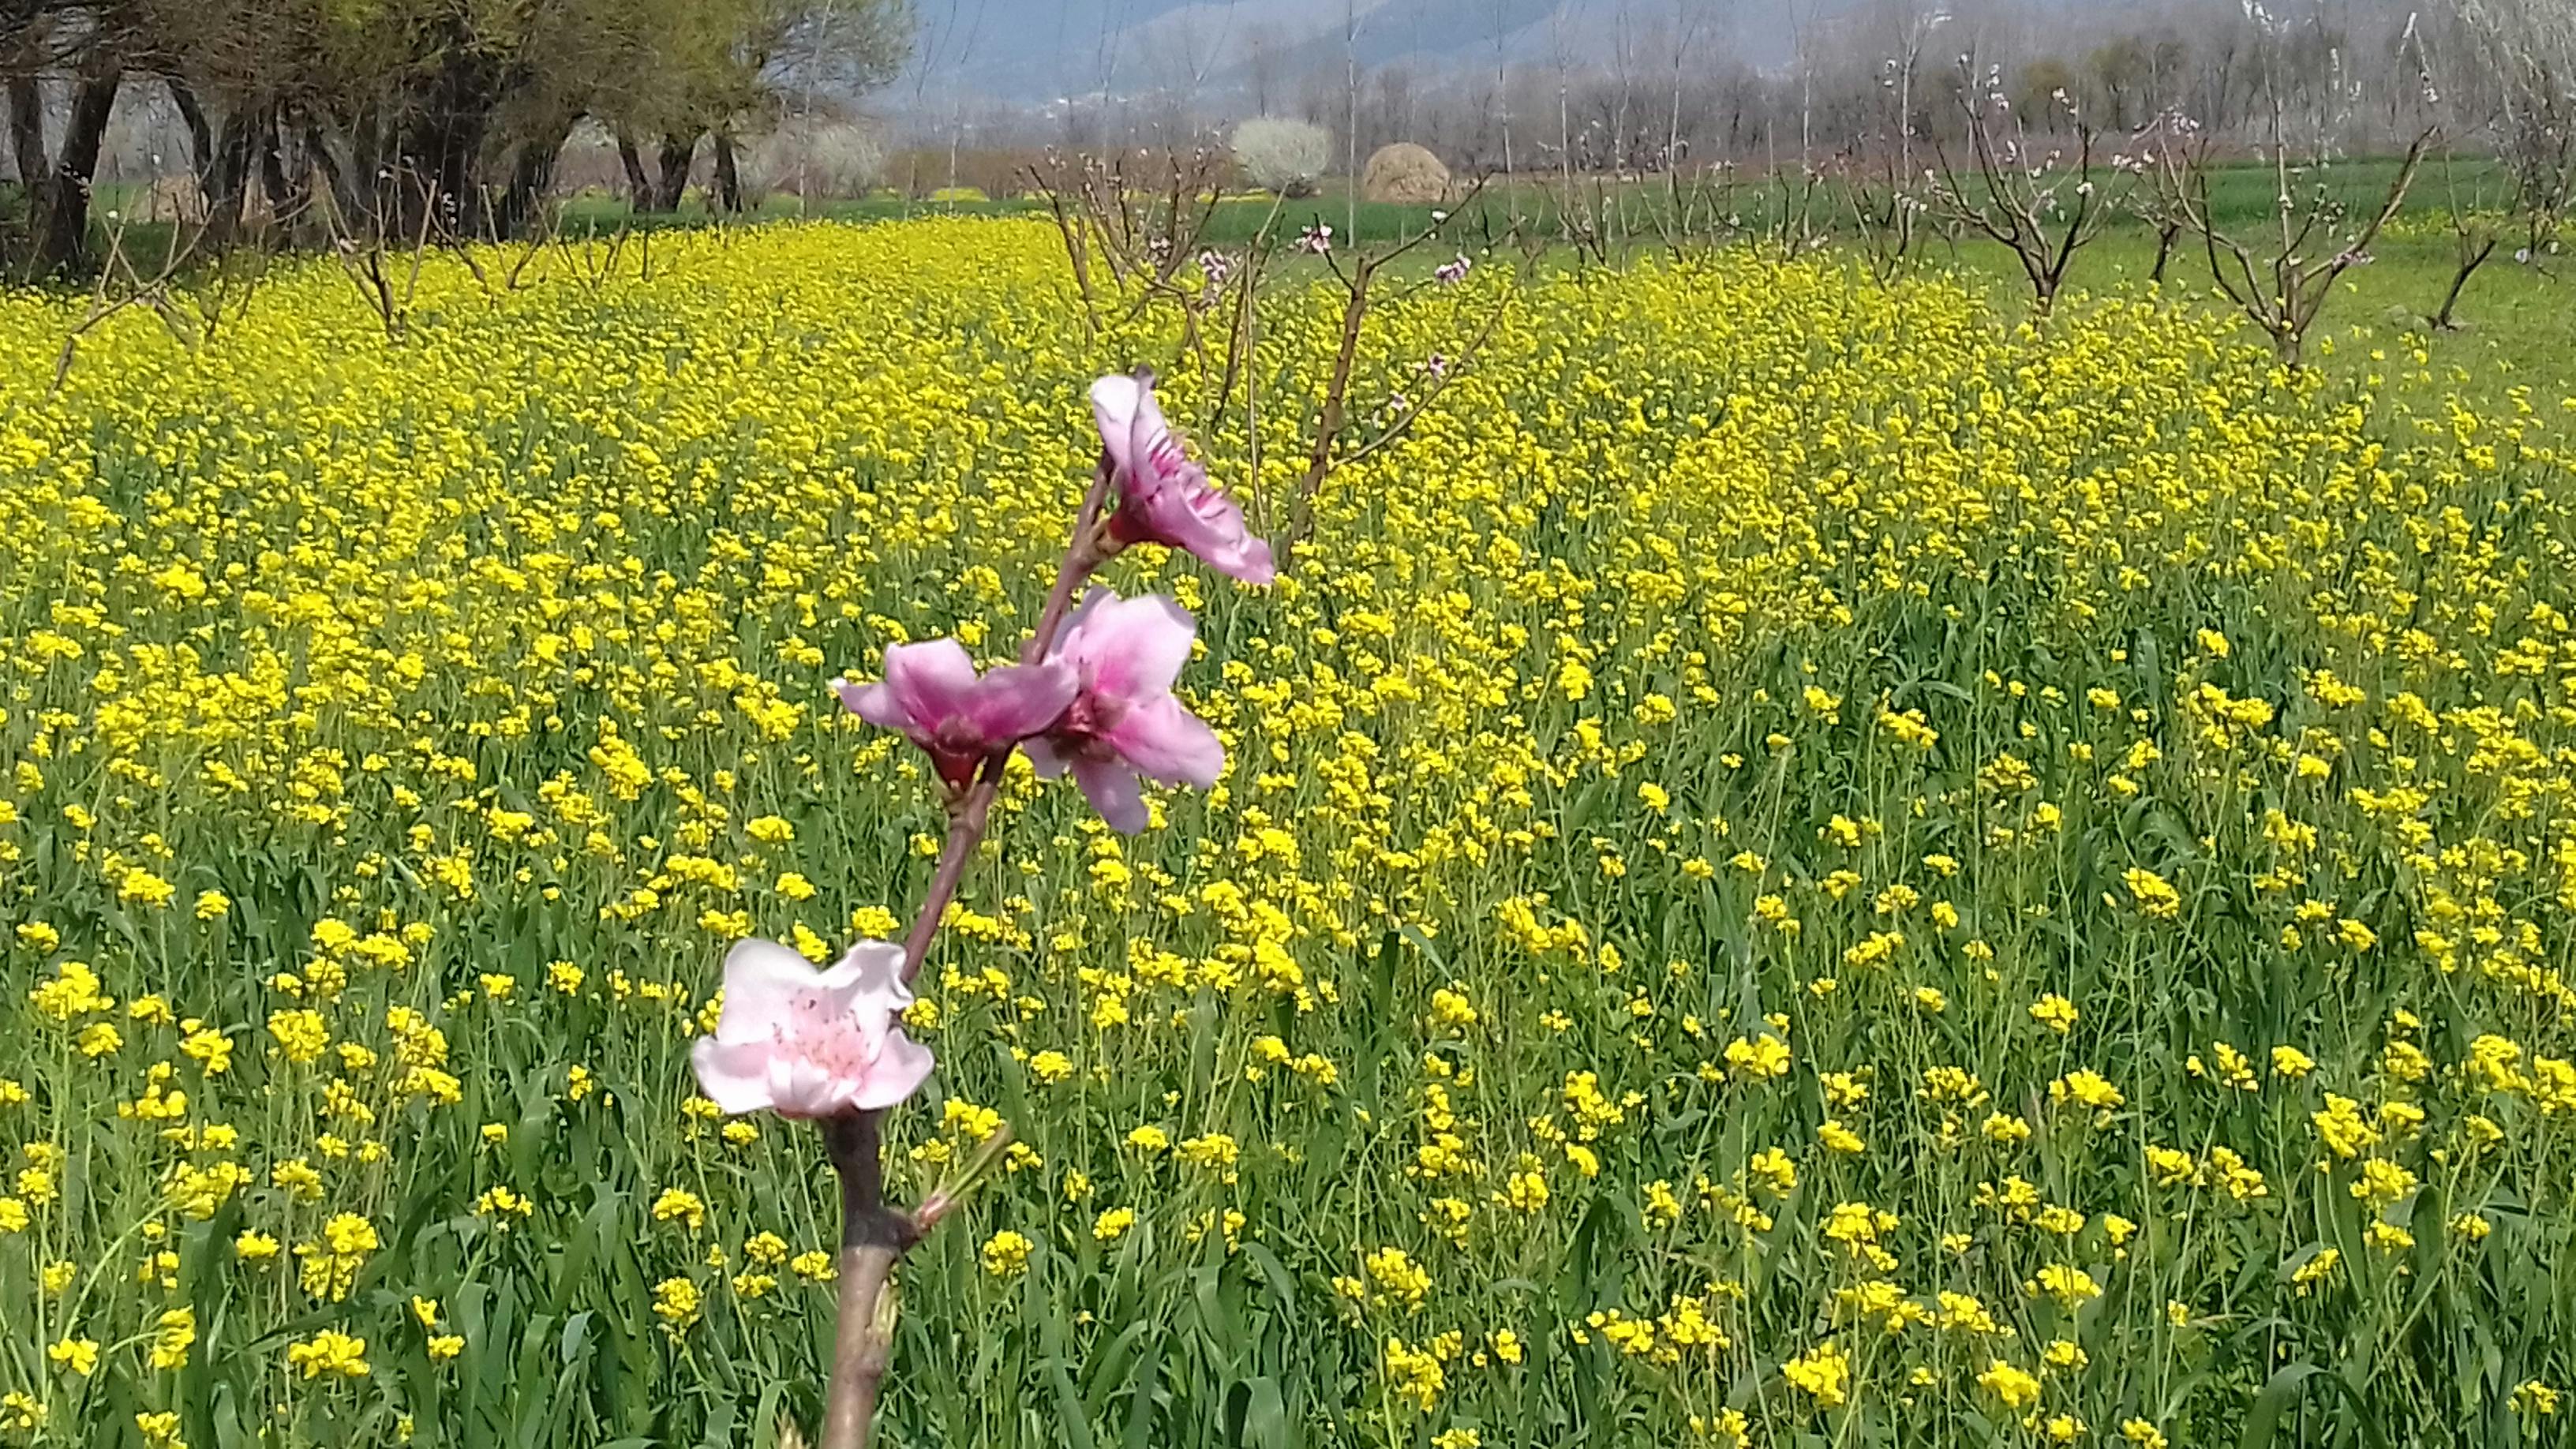 Free stock photo of Spring Season, swat pakistan